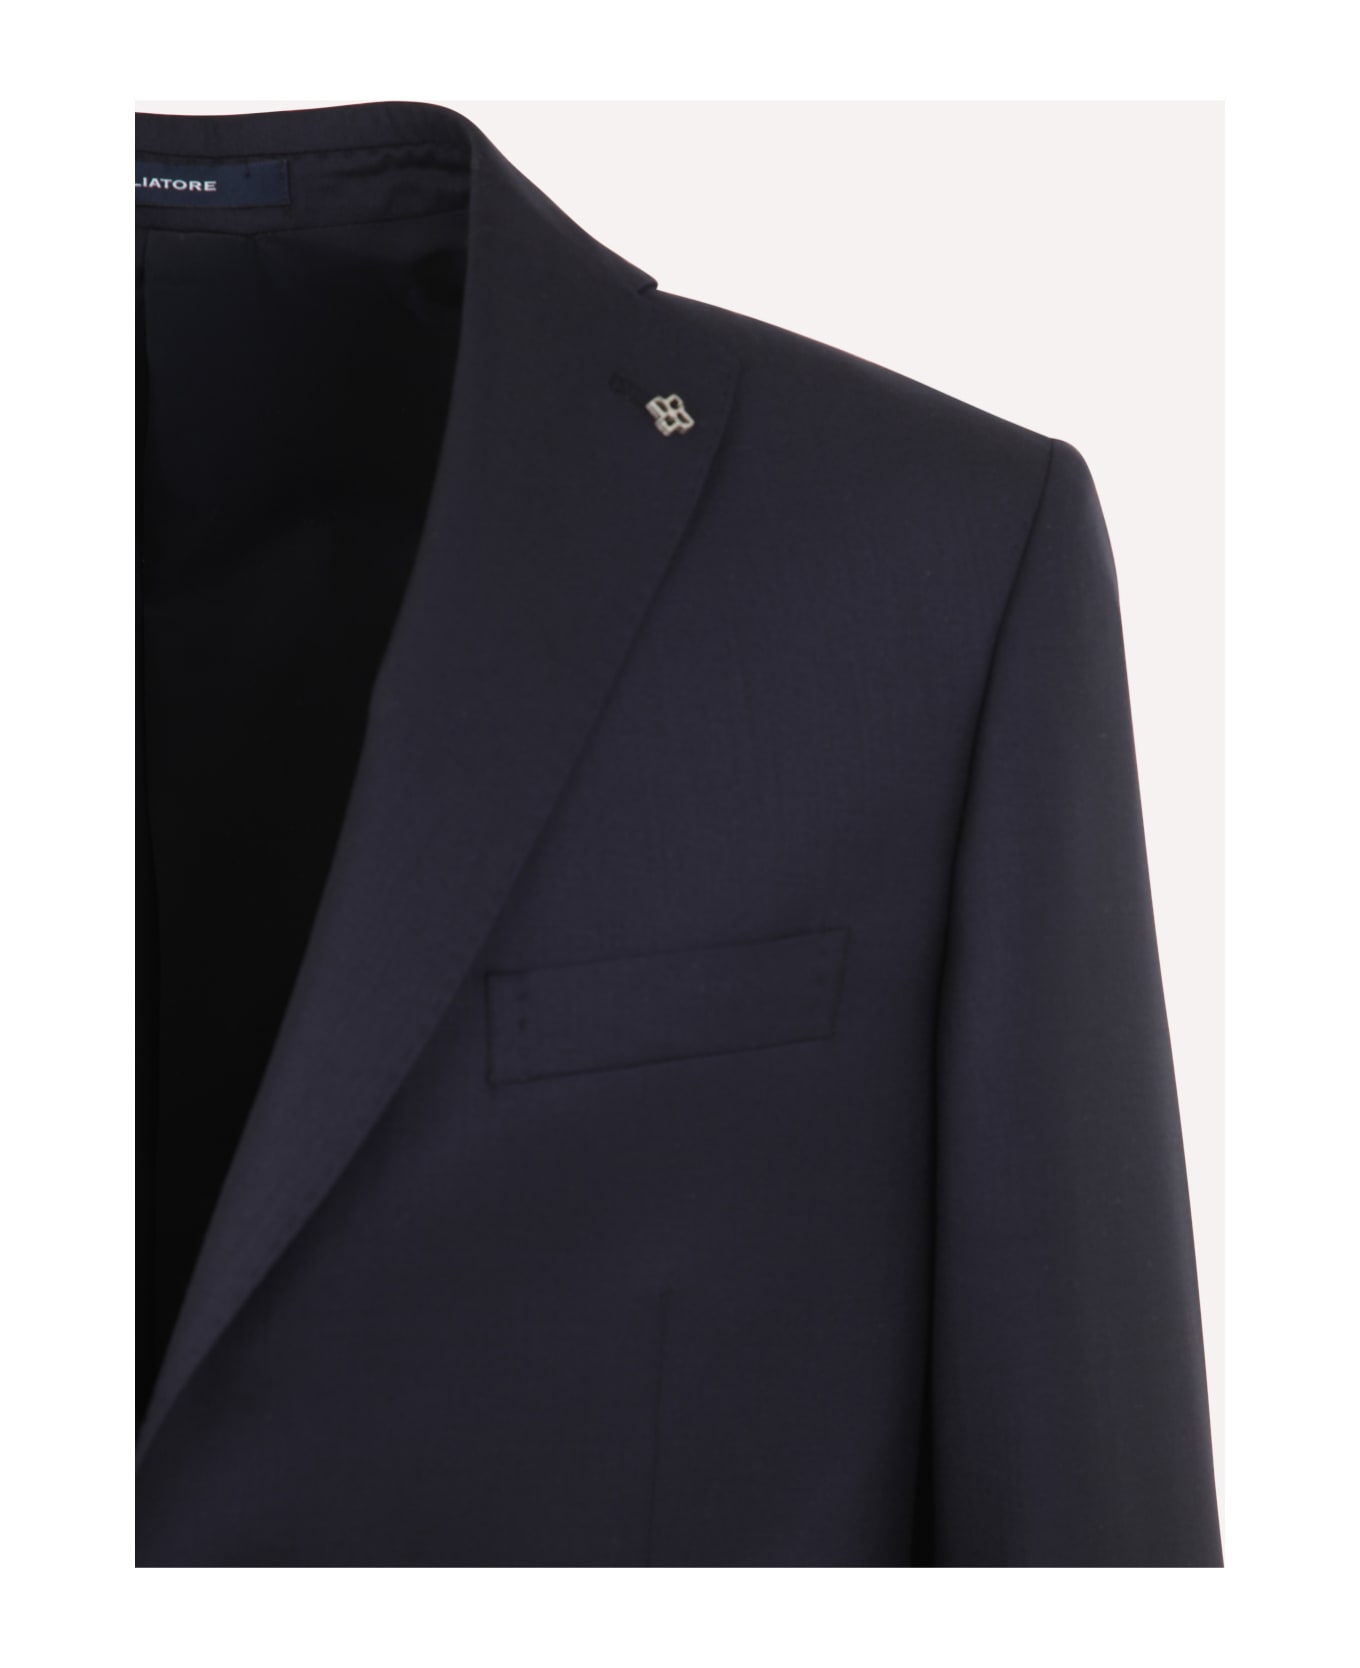 Tagliatore Classic Suit - Navy Blue